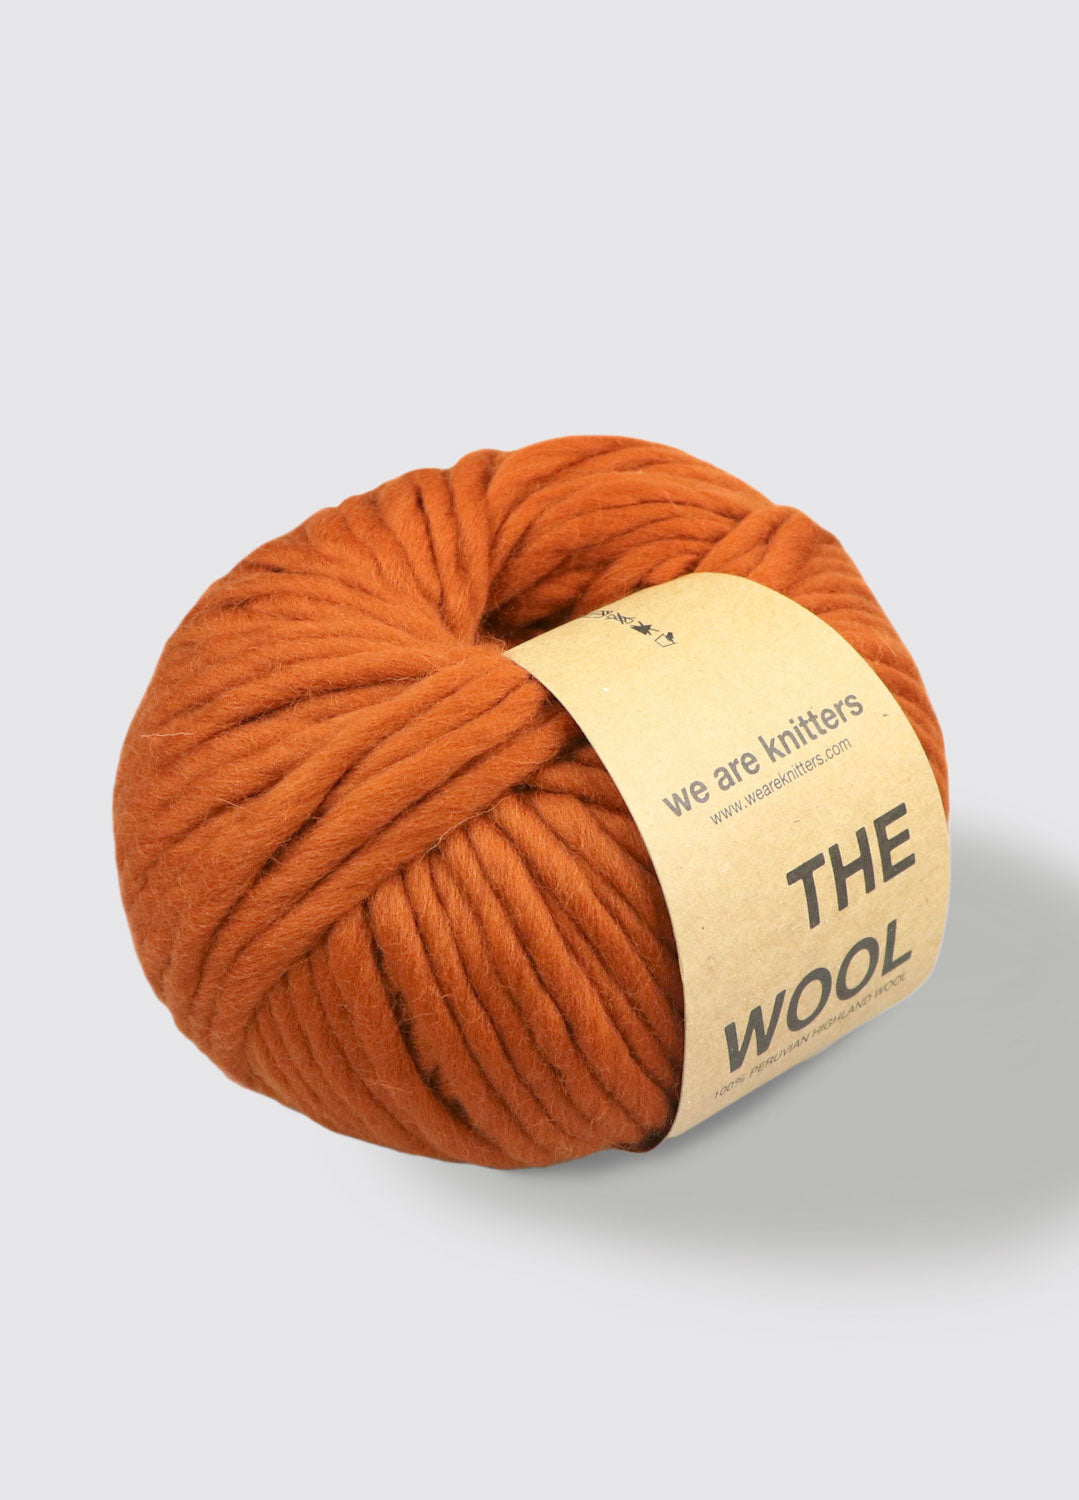 The Wool Cinnamon